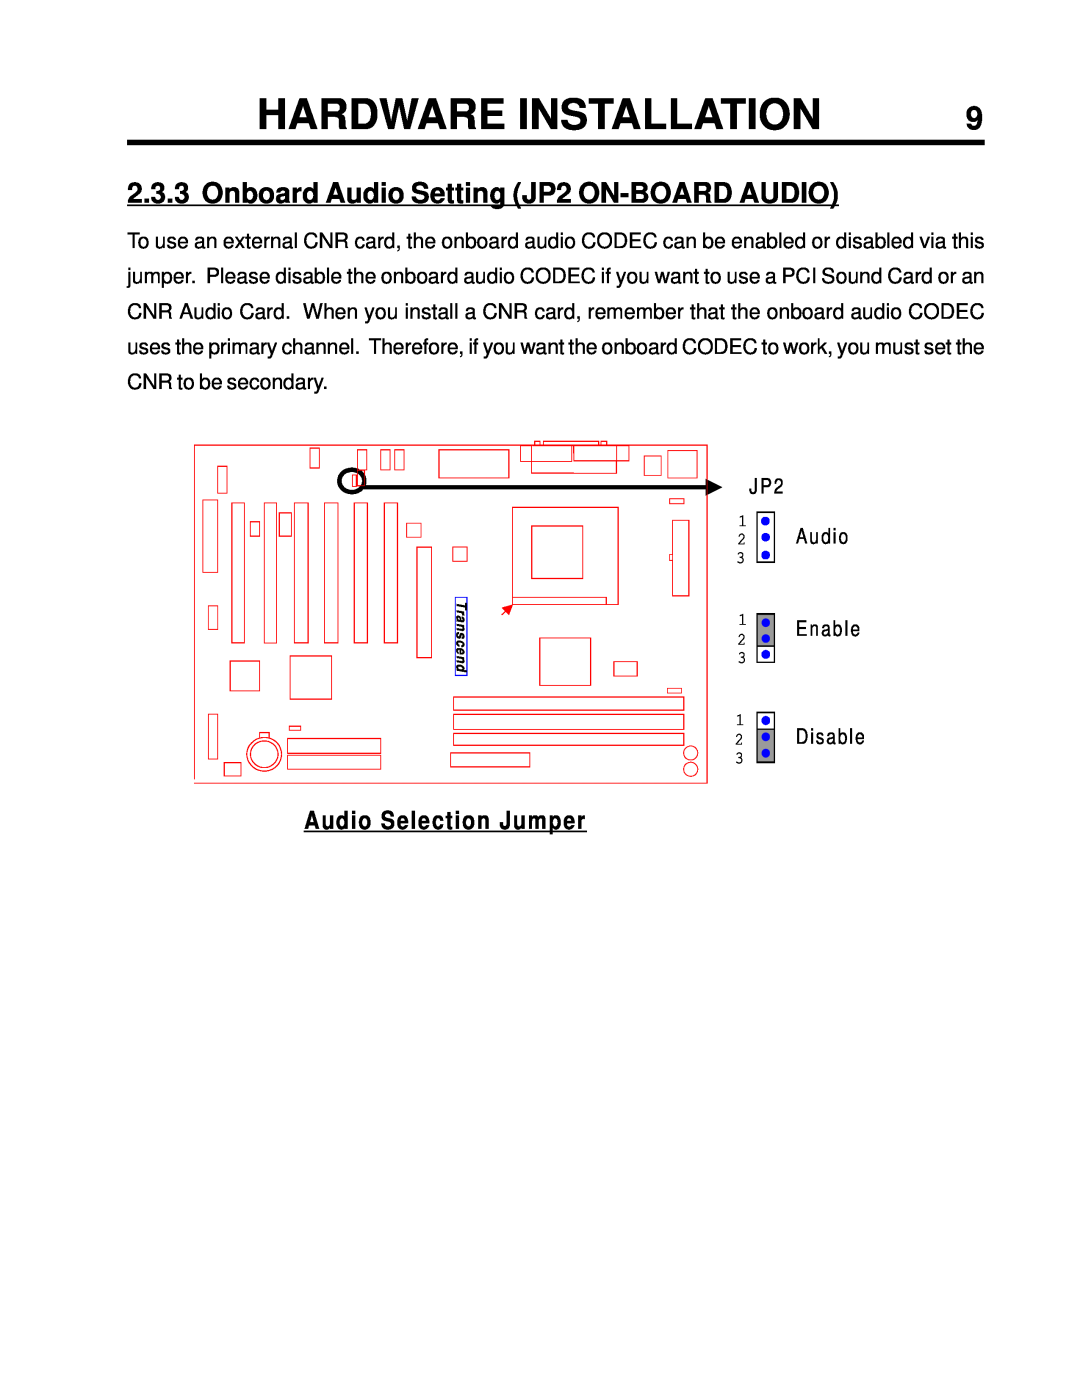 Intel TS-ASP3 user manual Onboard Audio Setting JP2 ON-BOARDAUDIO, Audio Selection Jumper, Hardware Installation 